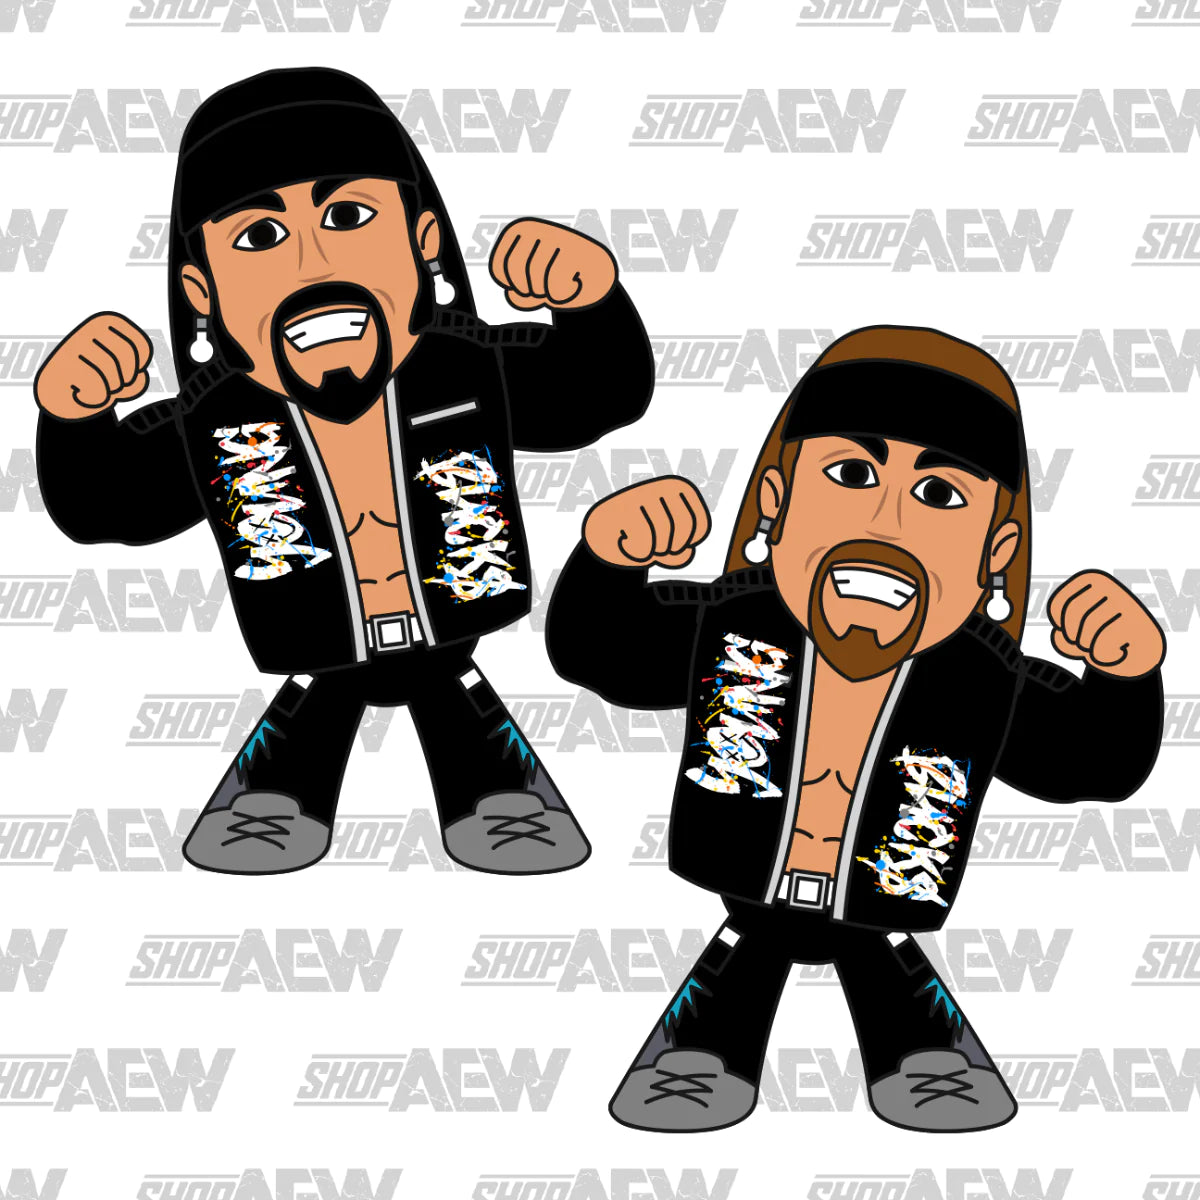 2023 AEW Pro Wrestling Tees Micro Brawlers Tag Team Edition 2 of 2 Nick Jackson [Splatter Gear]